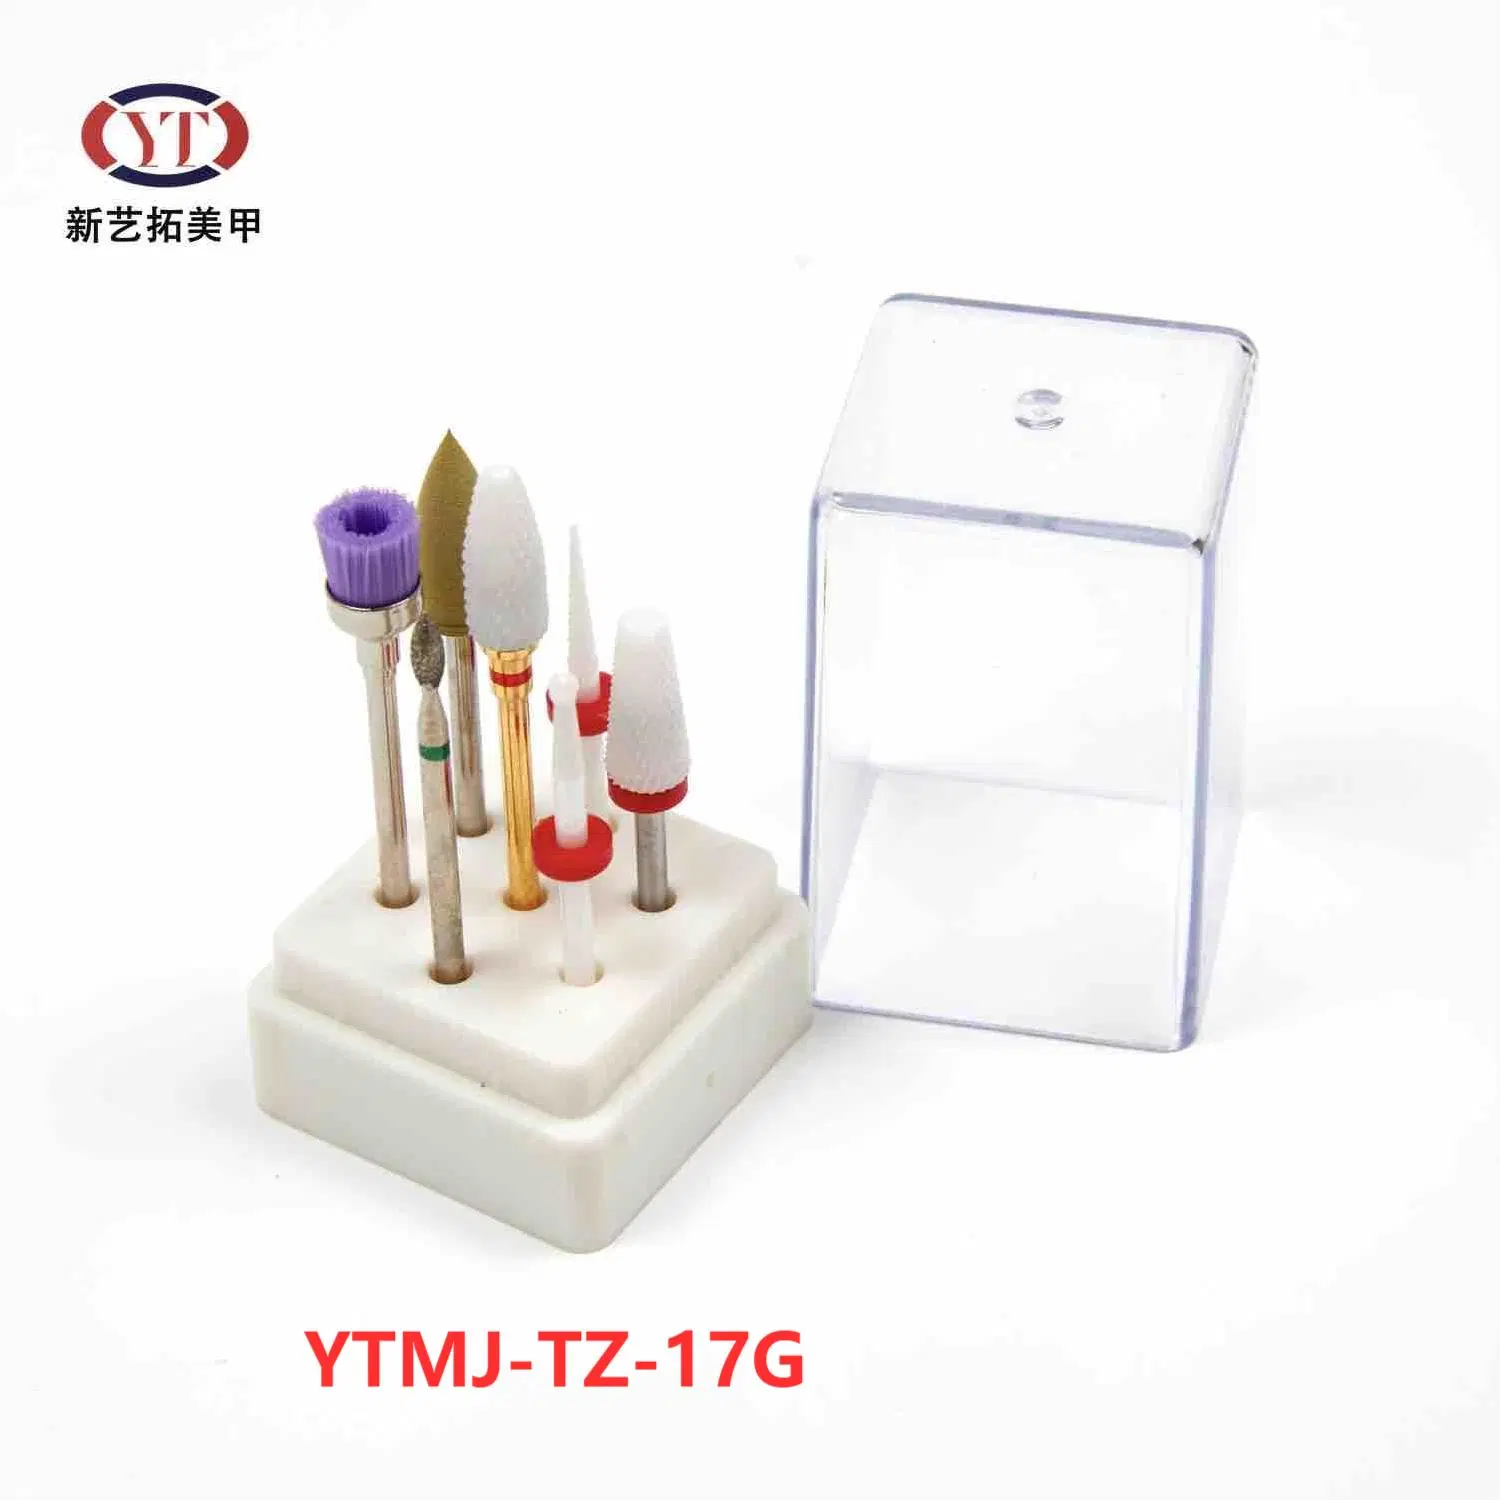 Ytmj-Tz-17h 7 PCS prego de cerâmica de carboneto de tungstênio Brocas Definir Electric Manicure Pedicure Burr semeadoras de Arquivo Bit de moagem